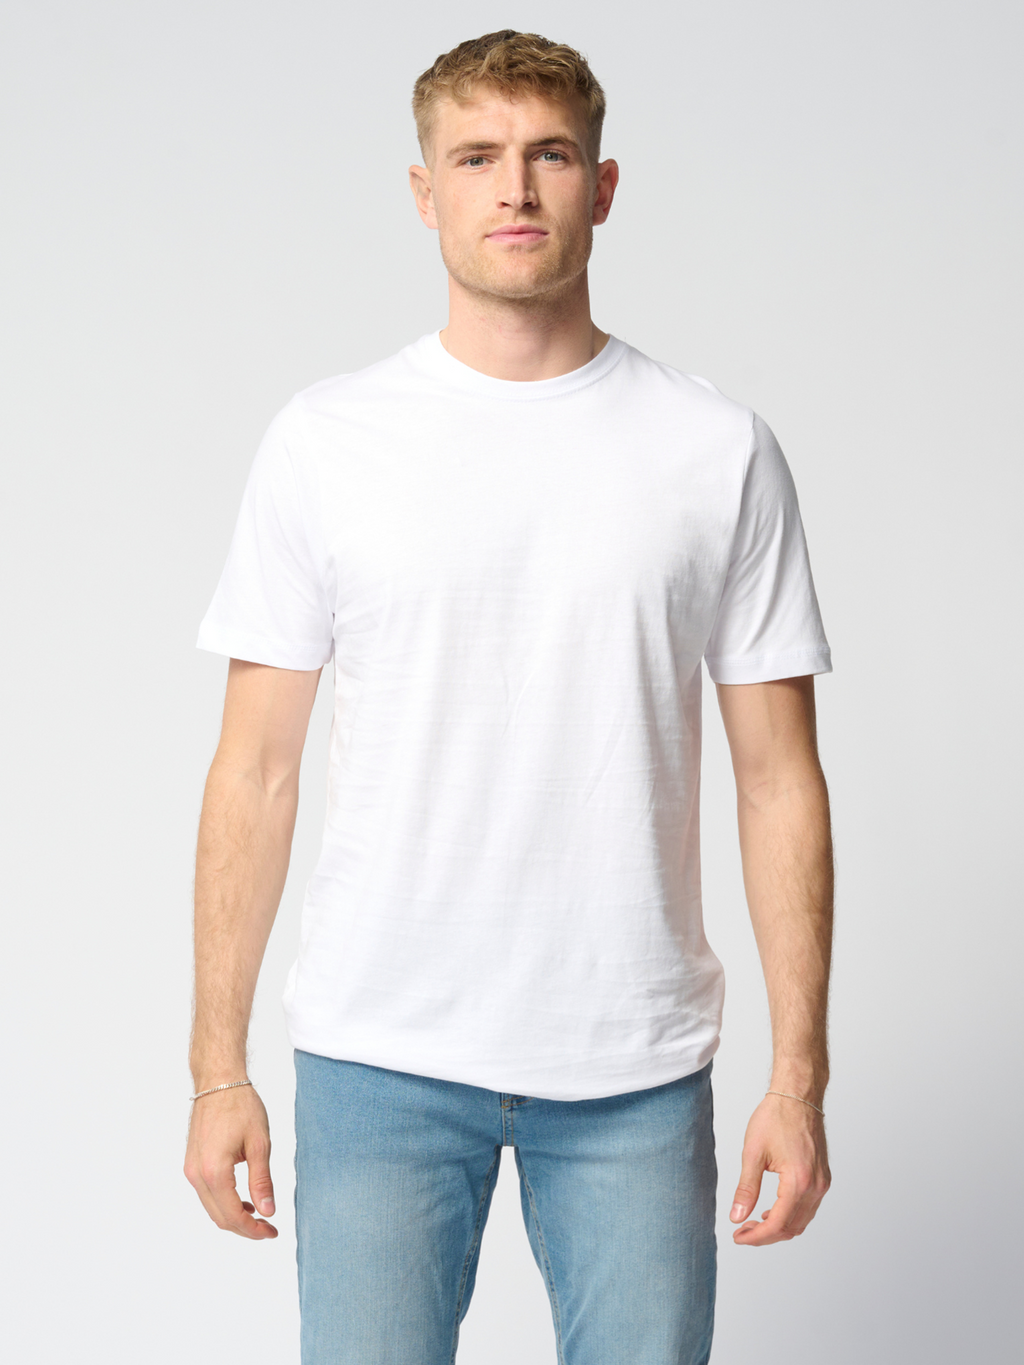 Organic Basic T-Shirts - Package Deal (9 pcs.)